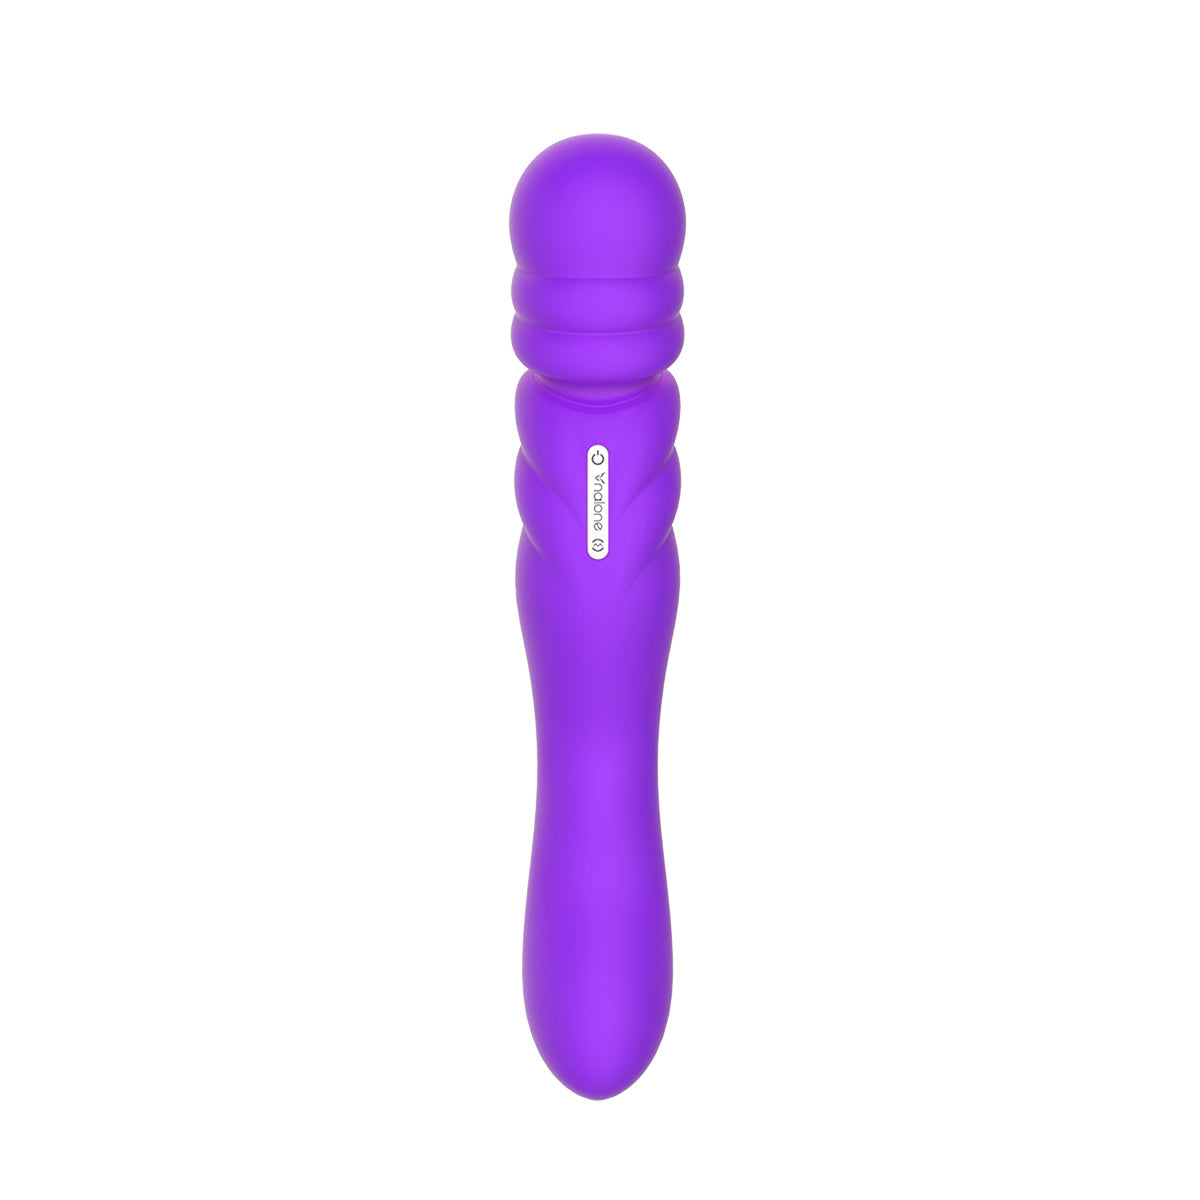 Nalone Jane - Purple: Rechargeable G-Spot Vibrator